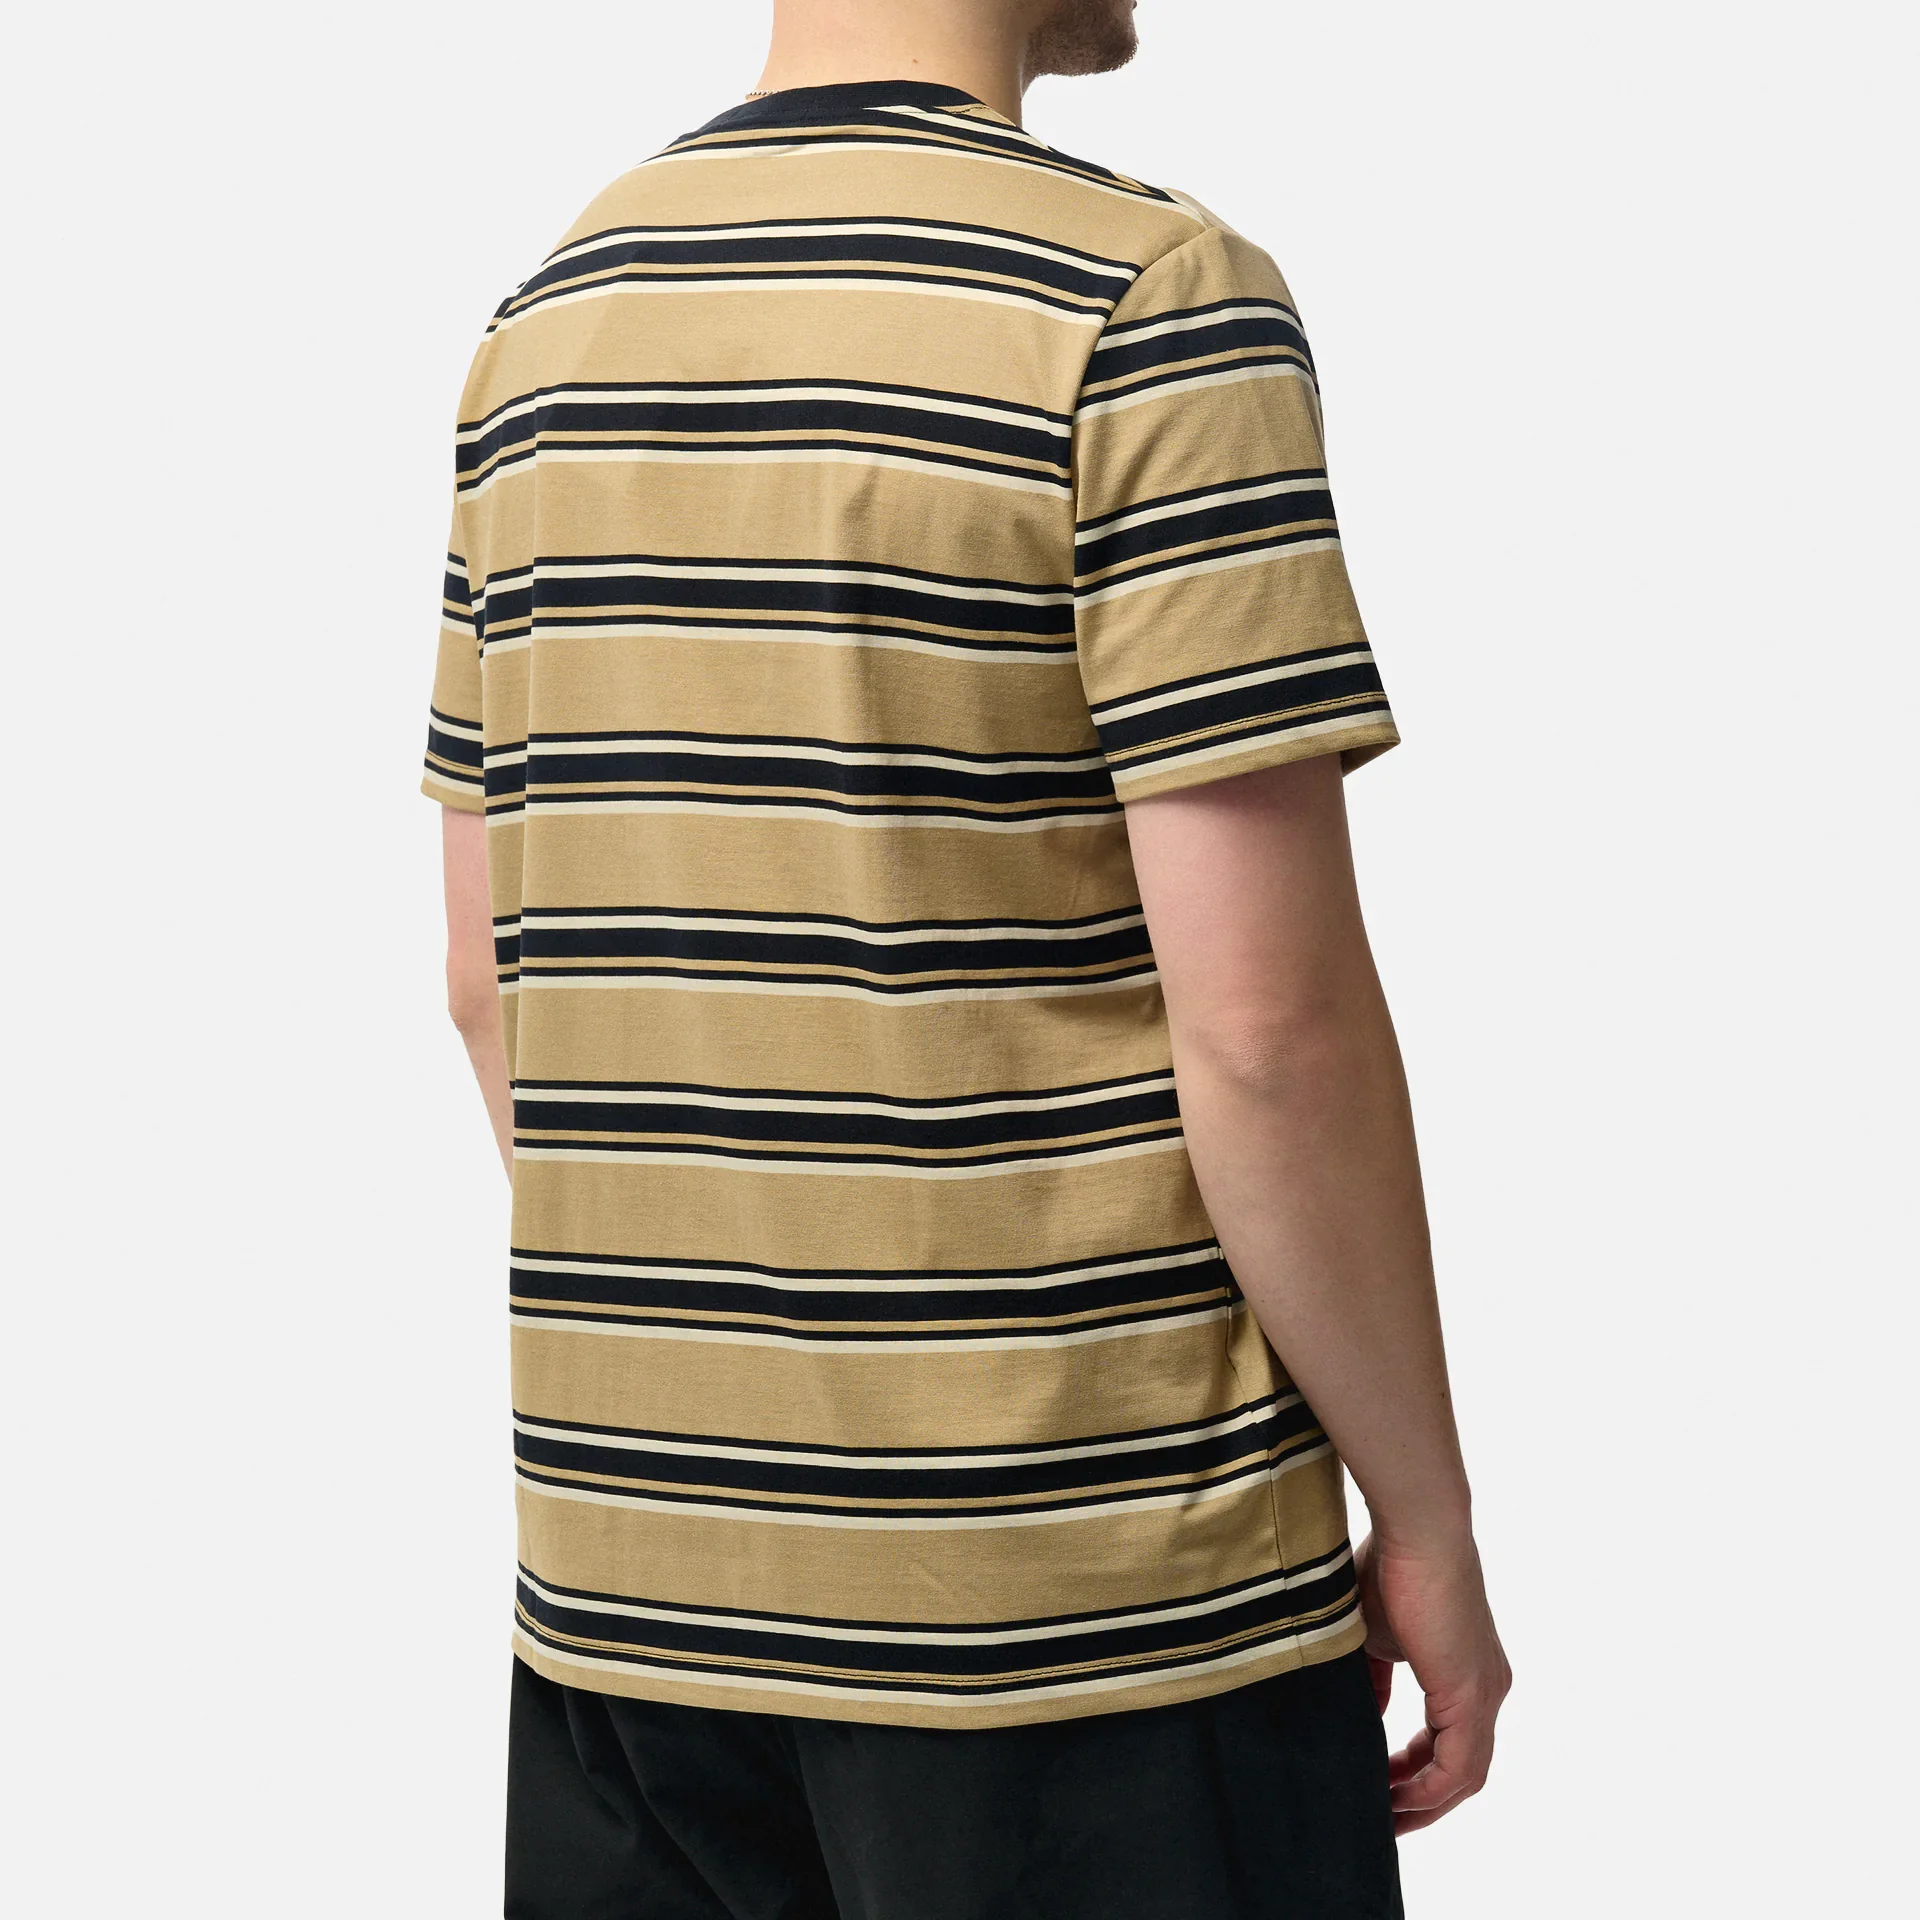 Fred Perry Stripe T-Shirt Warmstone/Oatmeal